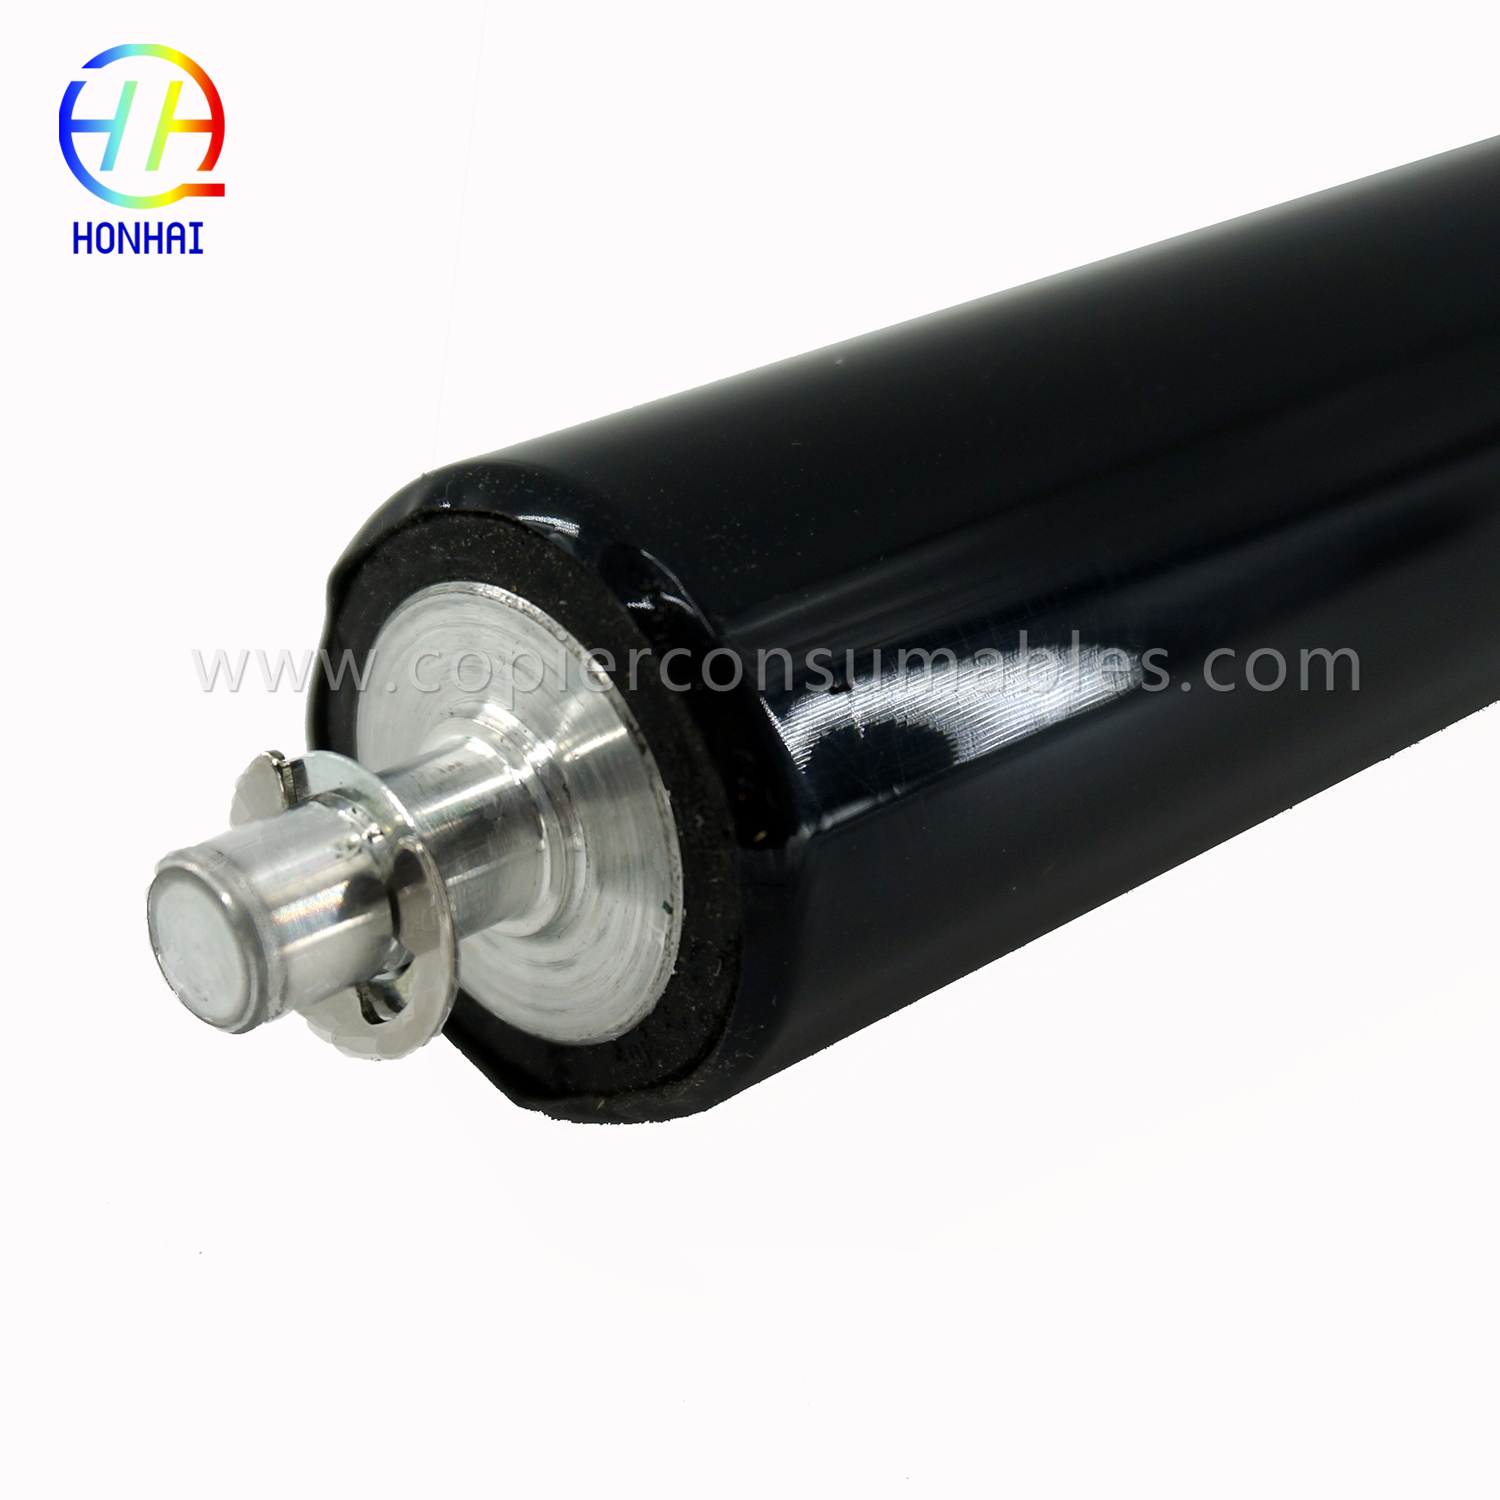 Lower Pressure Roller HP 4015 4250 4300 4345 4350 4515 M601 (RC1-3321-000) (10)